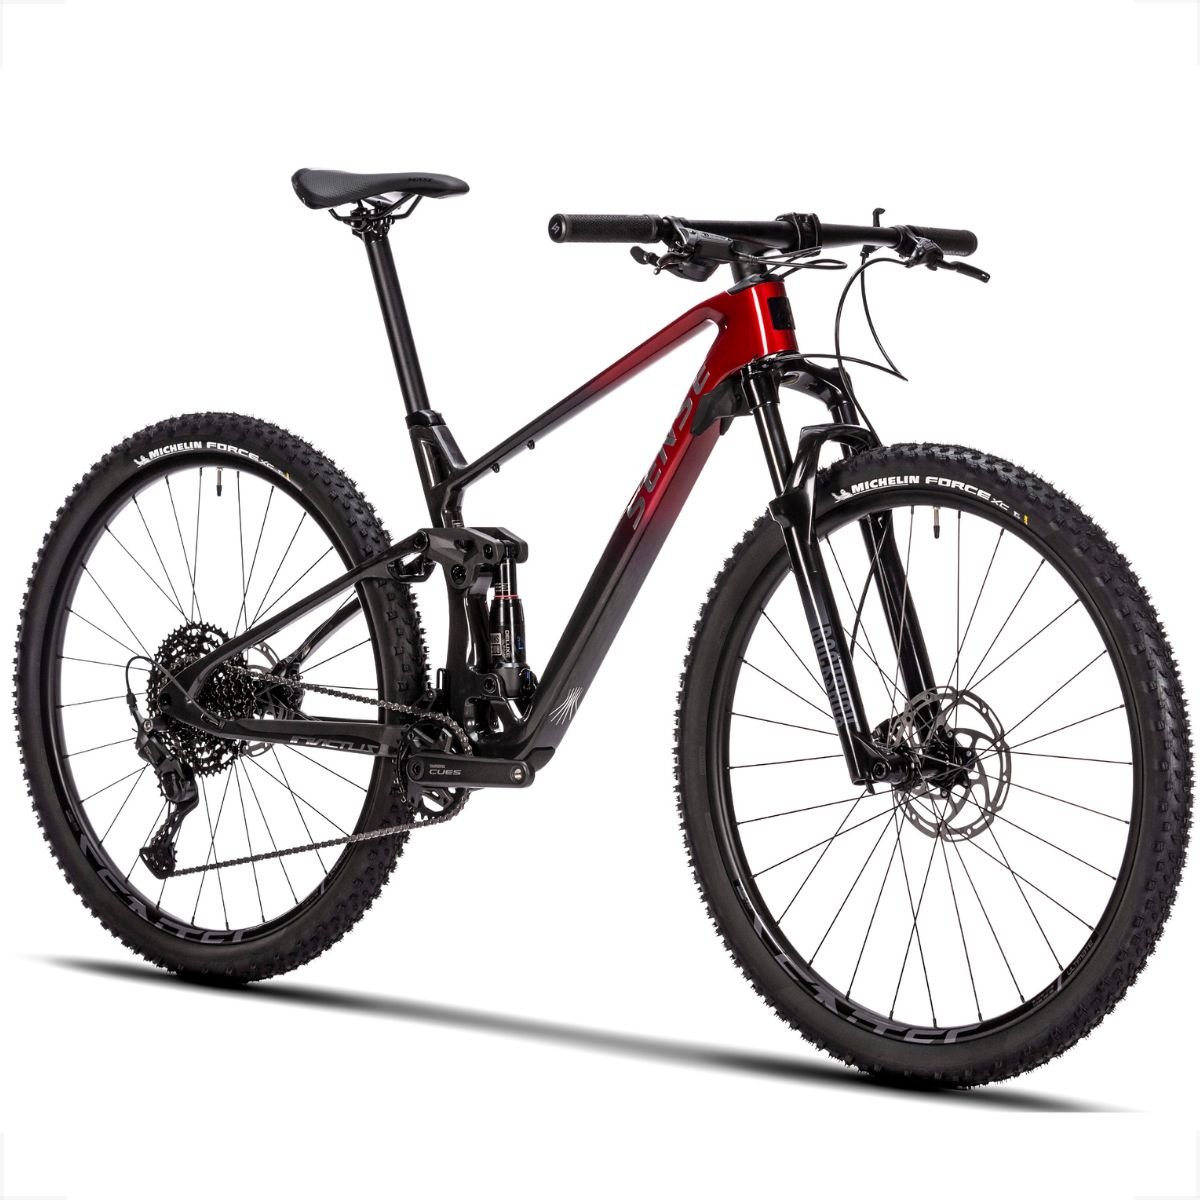 Bicicleta Full Sense Invictus Sport Carbono Shimano Cues:vermelho+preto/19 - 1